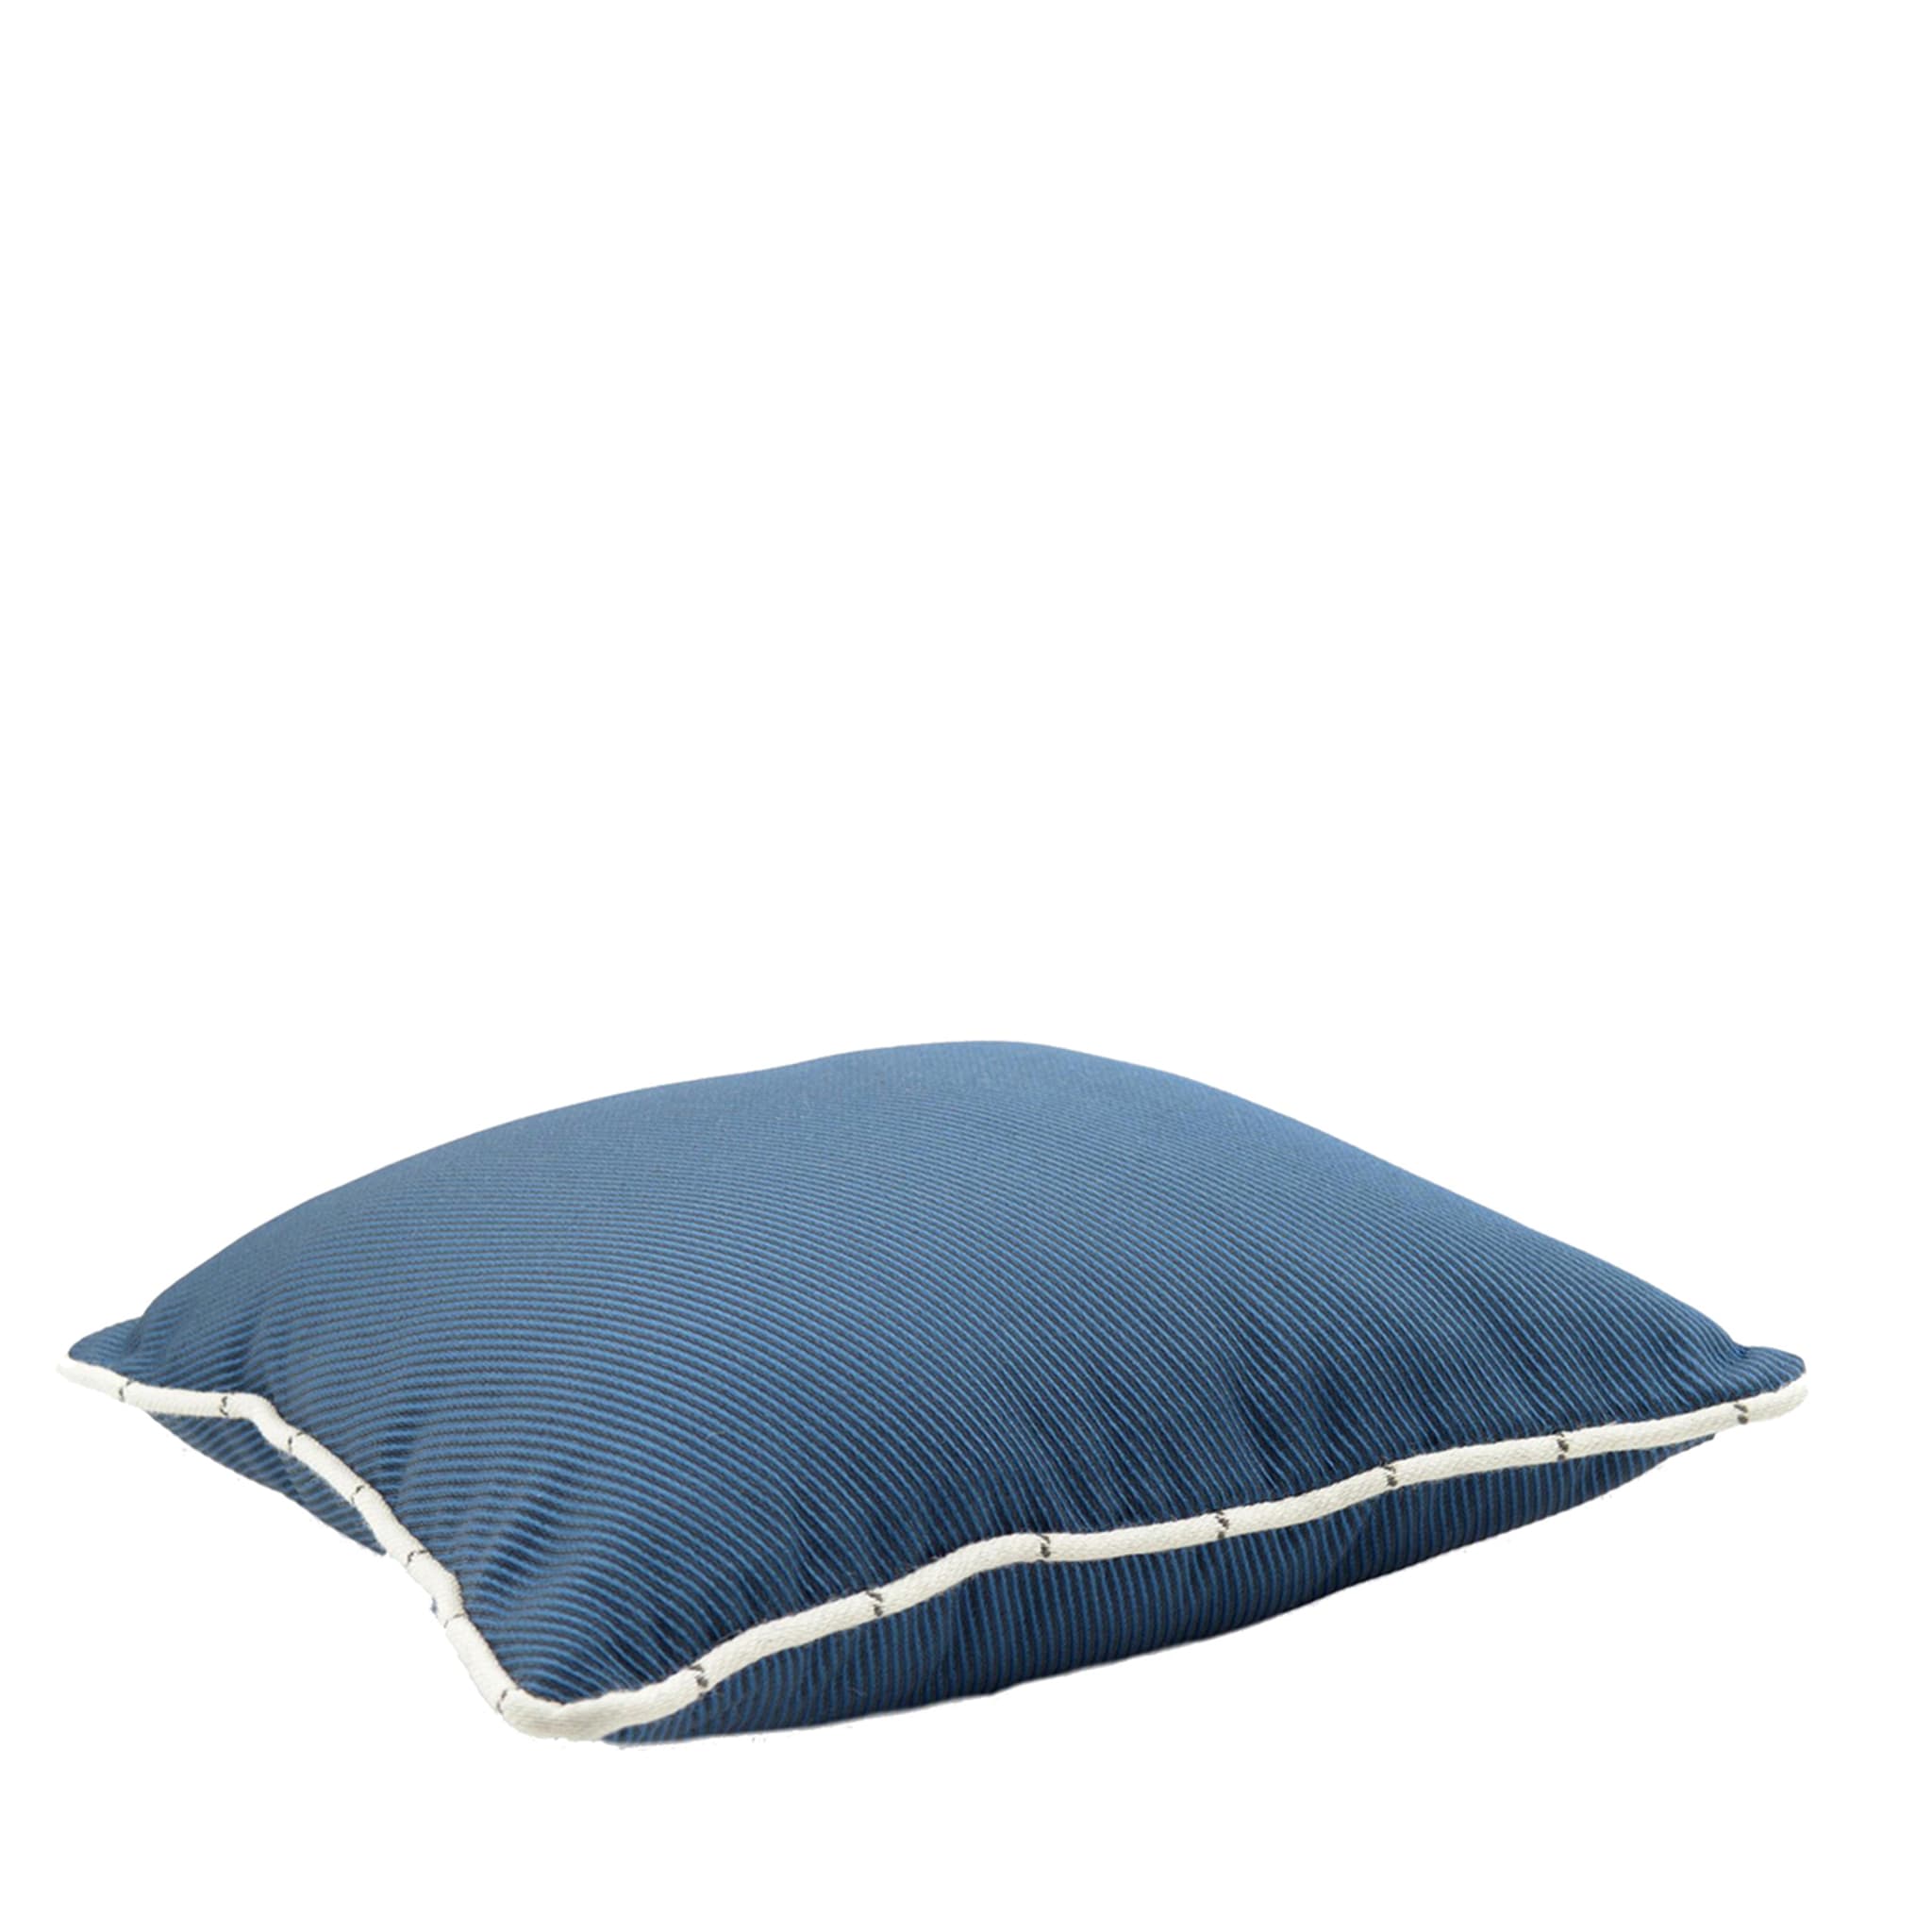 Blue Carré Cushion in false unit jacquard fabric - Alternative view 1